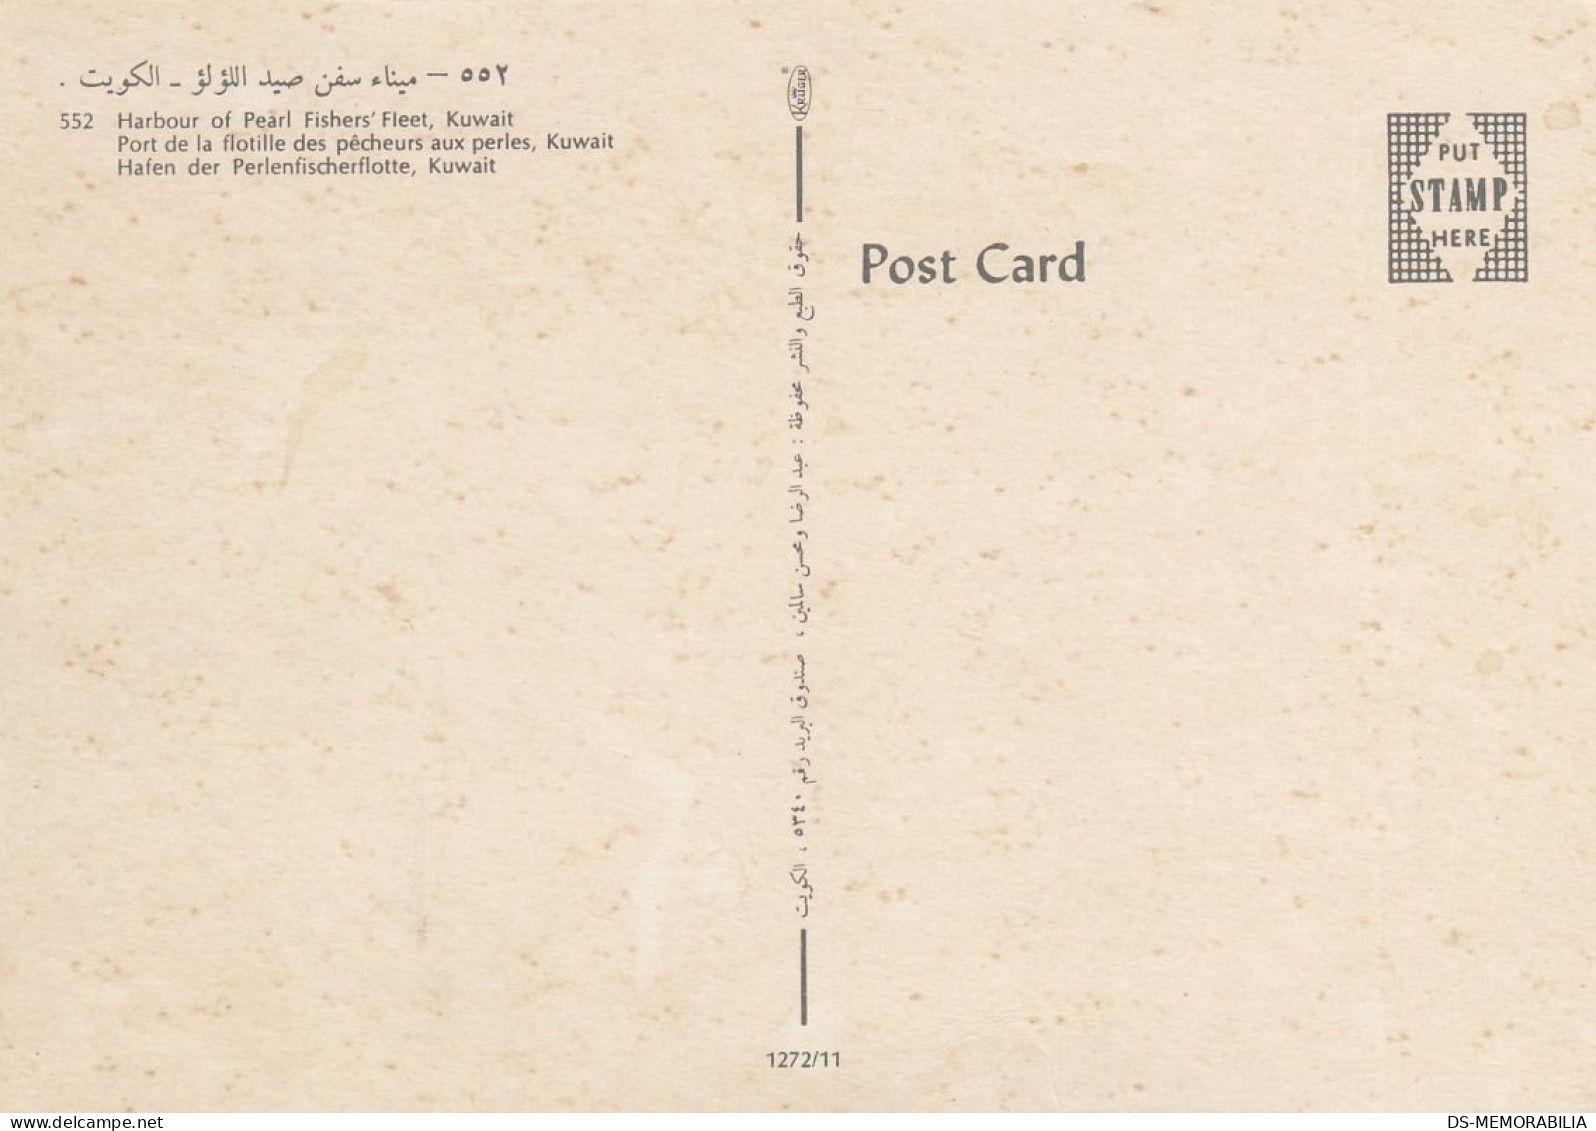 KUWAIT - Harbour Of Pearl Fisher's Fleet Old Postcard - Kuwait